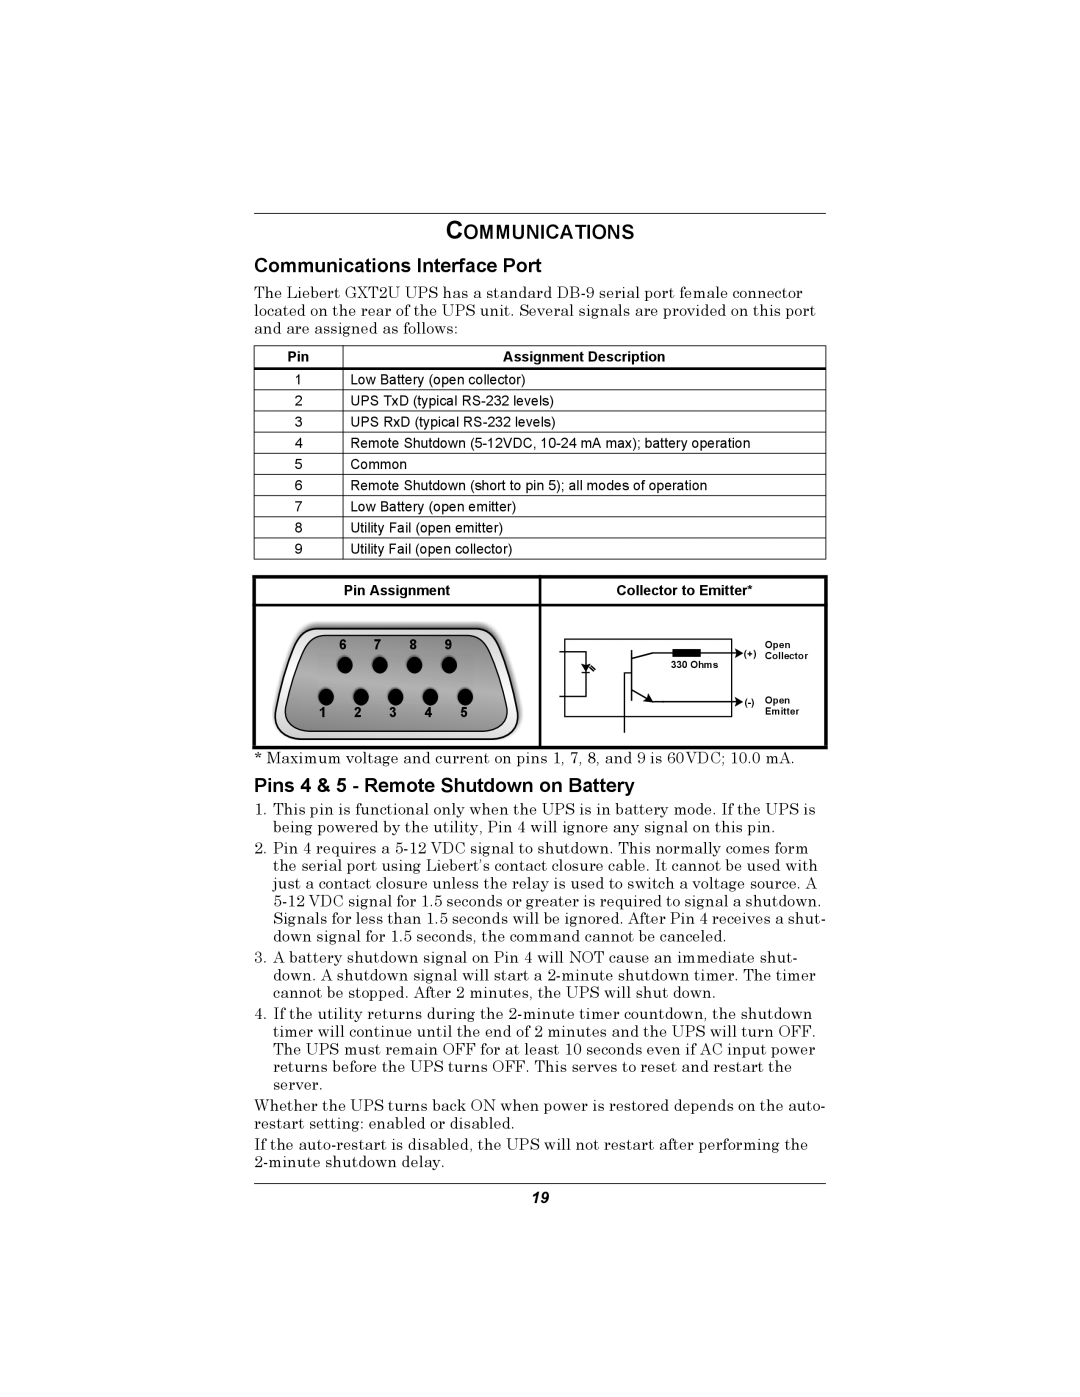 Emerson GXT2U user manual COMMUNICATIONS Communications Interface Port, Pins 4 & 5 - Remote Shutdown on Battery 